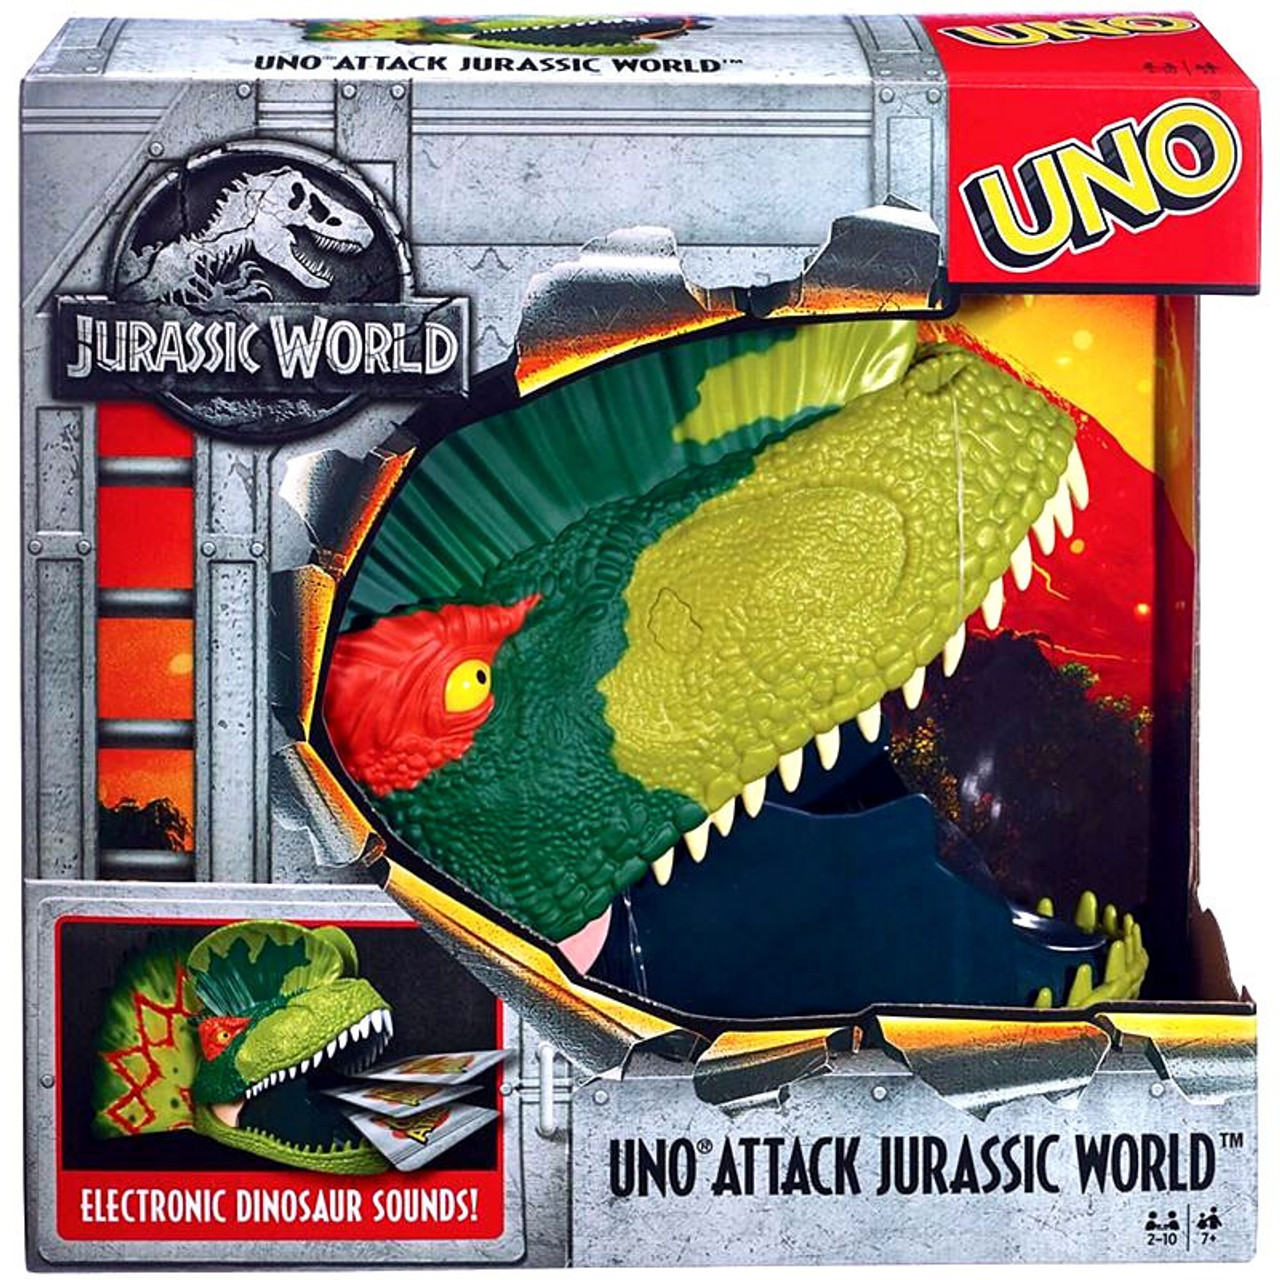 world jurassic uno Jurassic UNO World Jurassic Attack Card Game UNO World